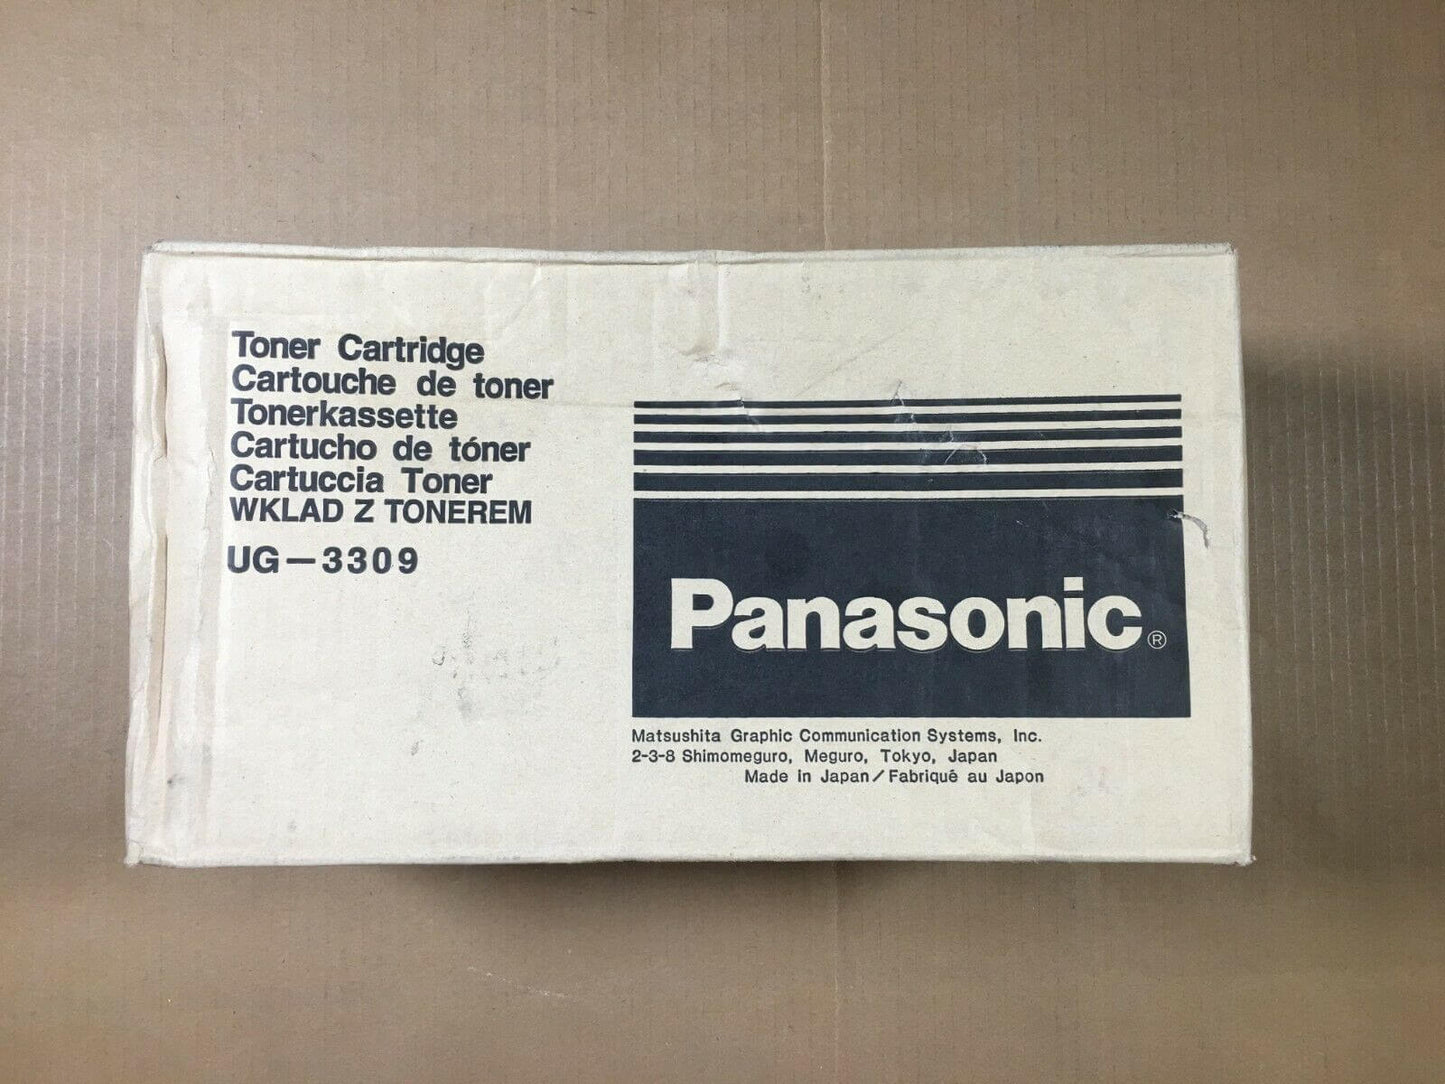 Genuine Panasonic Black Toner Cartridge For UG-3309 Same Day Shipping - copier-clearance-center